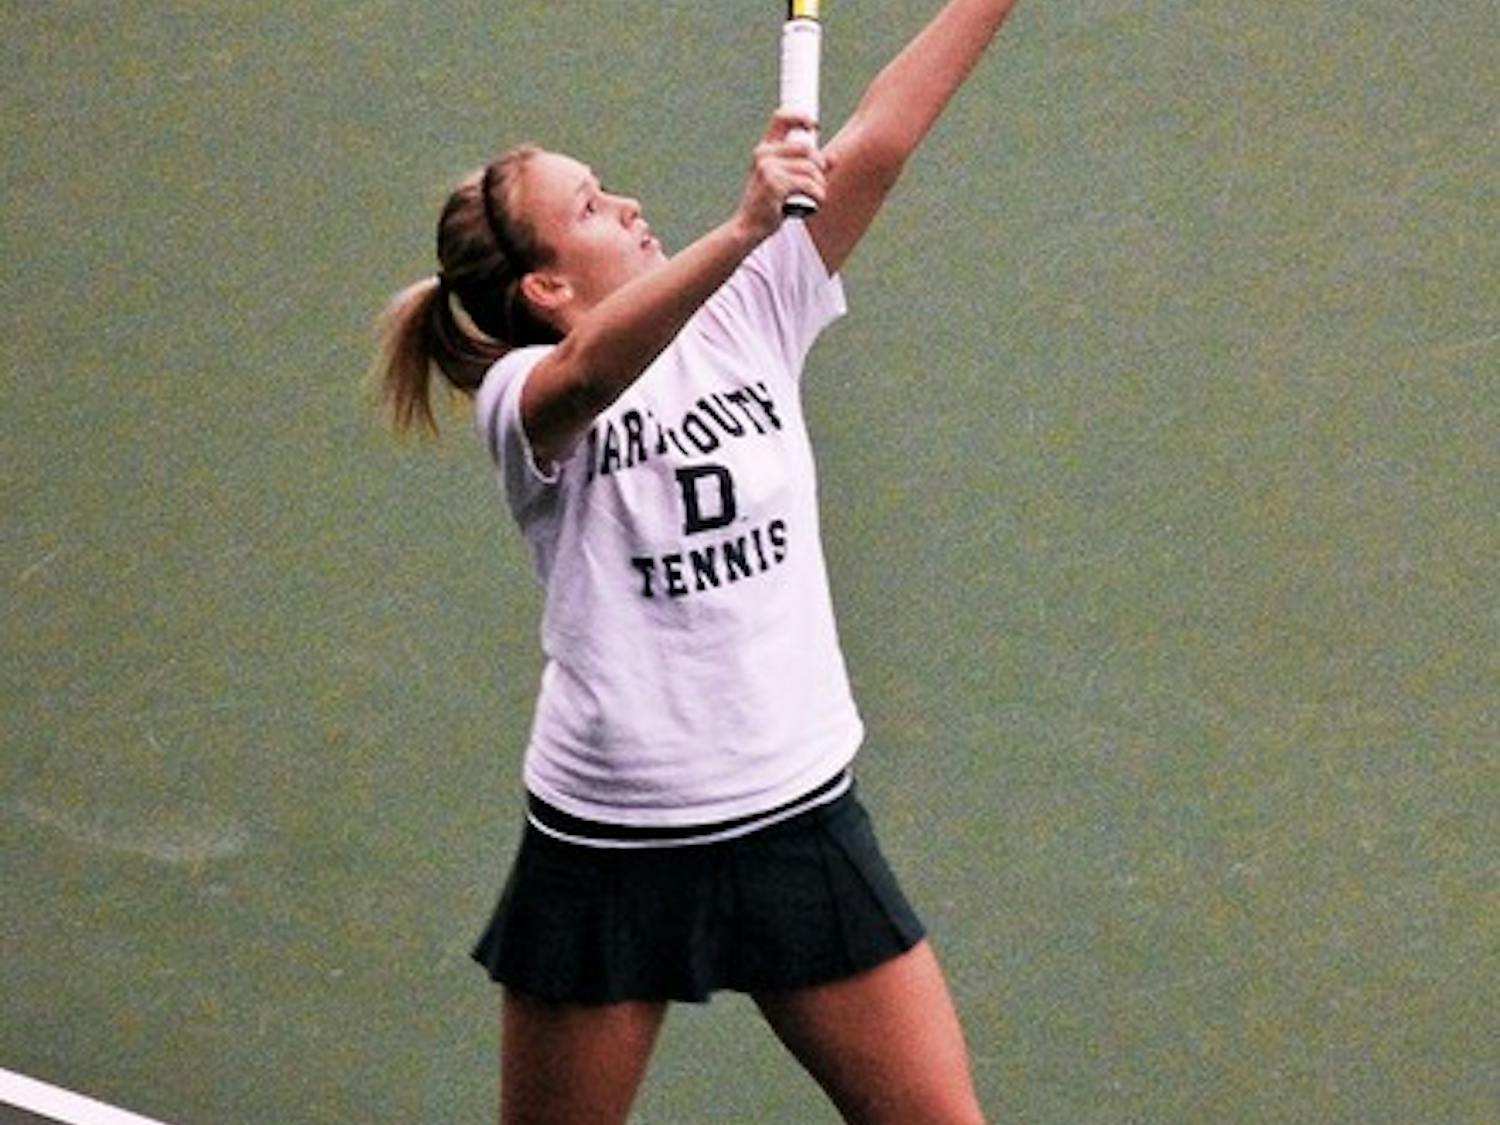 01.24.11.sports.tennis